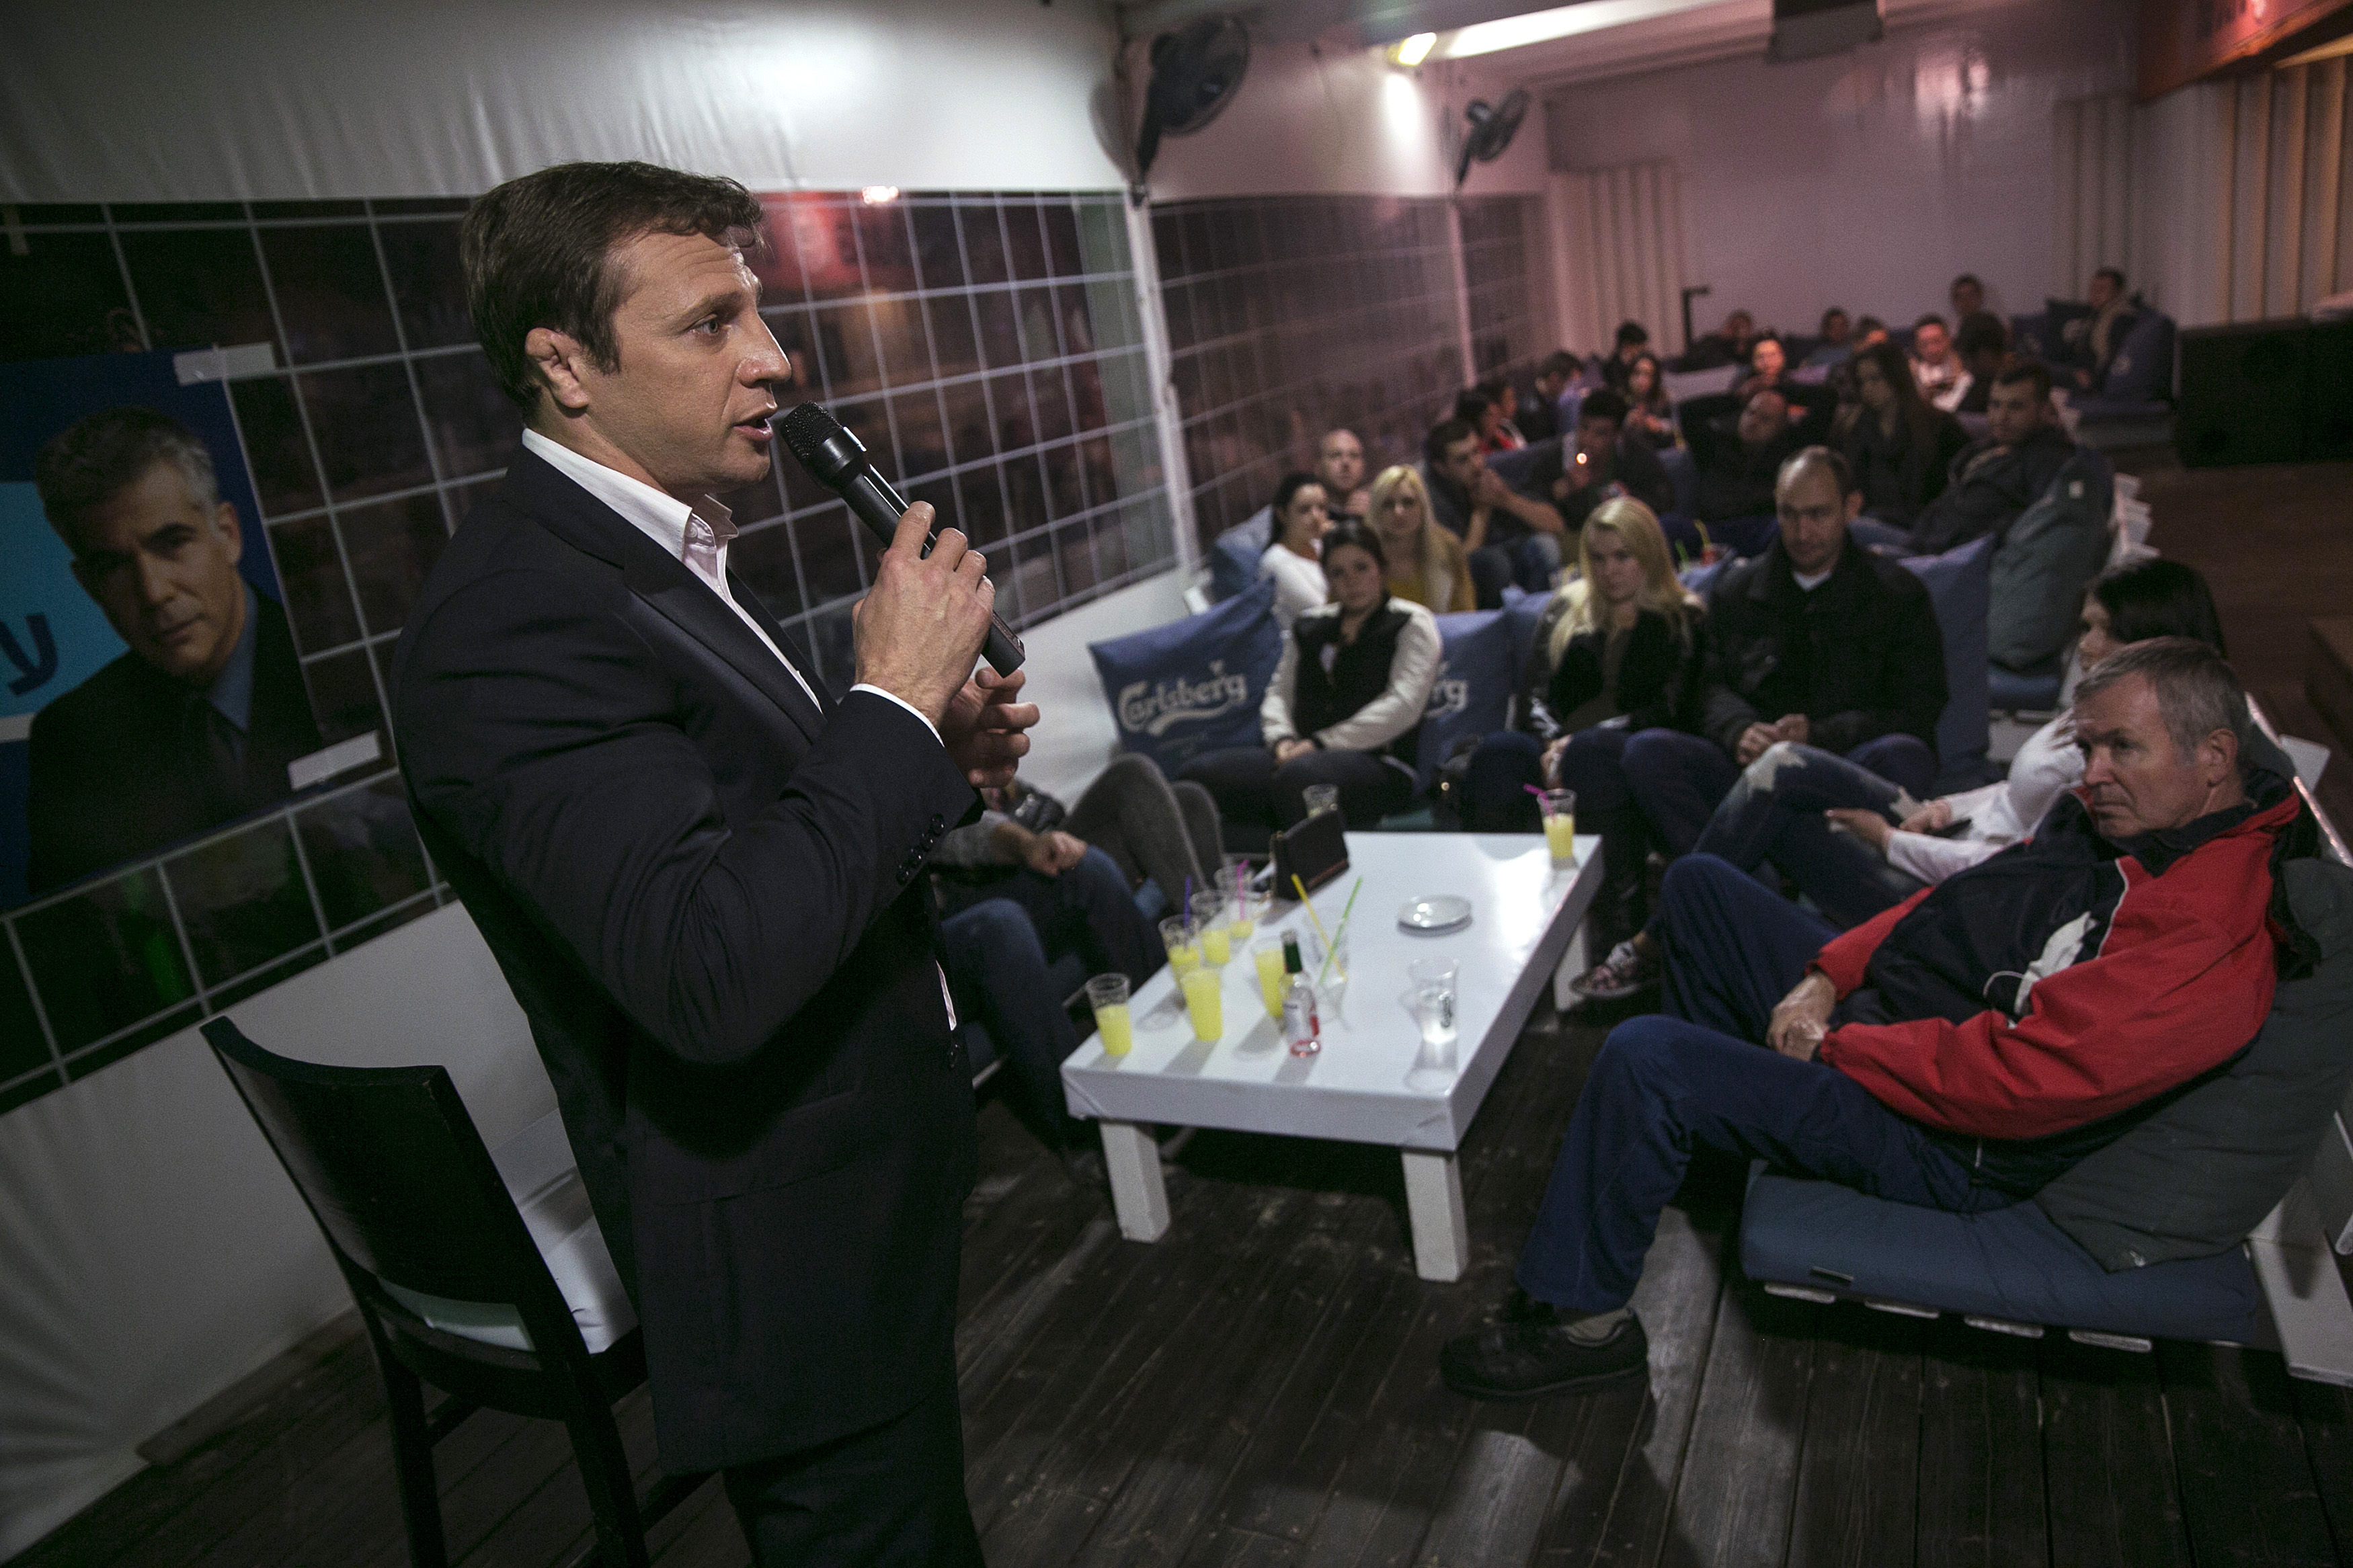 Lawmaker Razvozov addresses Russian-speaking Israelis as he campaigns in a pub in Bat Yam